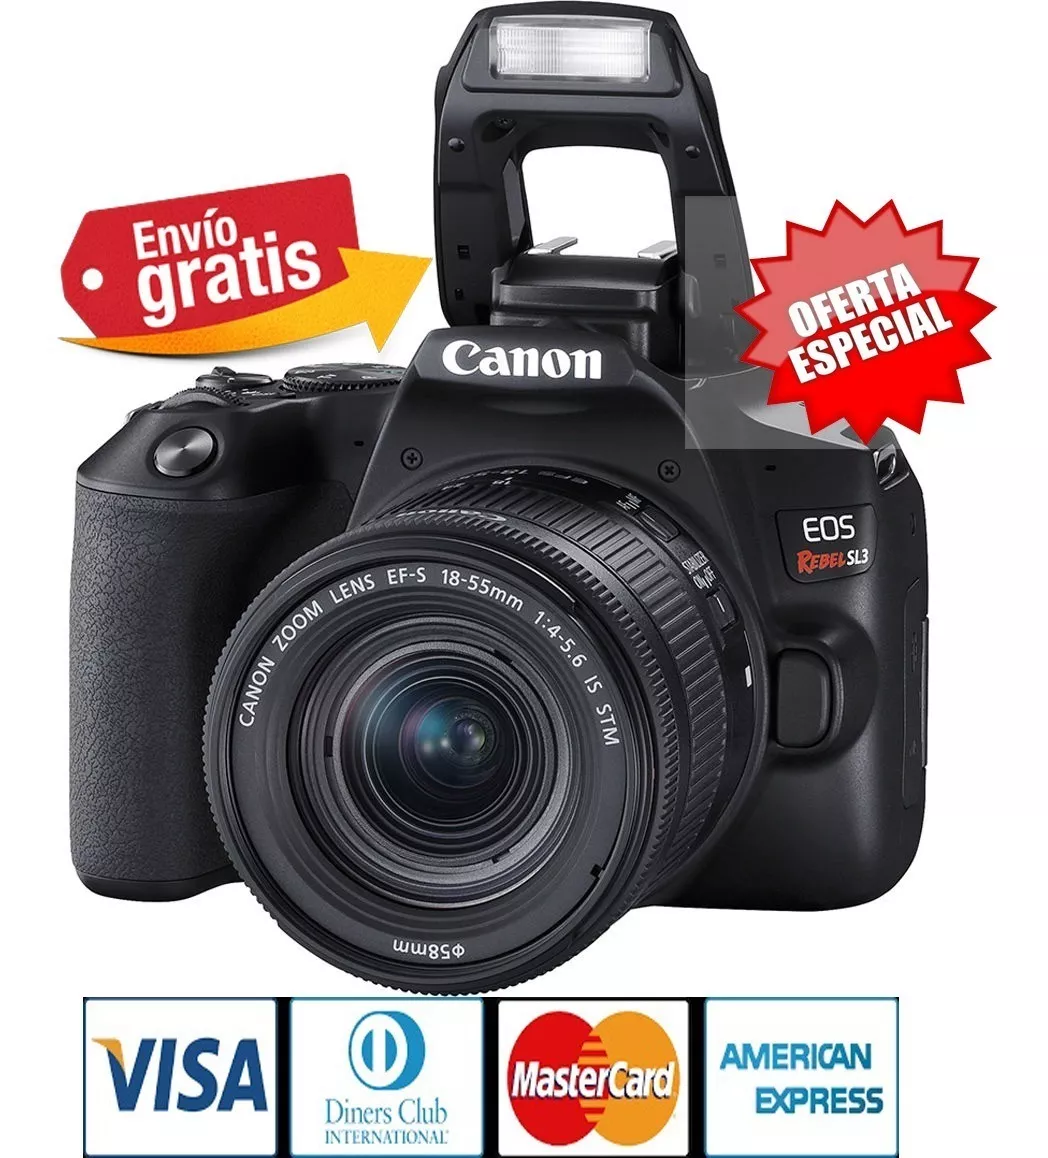 Camara Canon Sl3 Mejor Que T7i 18.55mm 24 Mpx 4k Wifi Hdmi